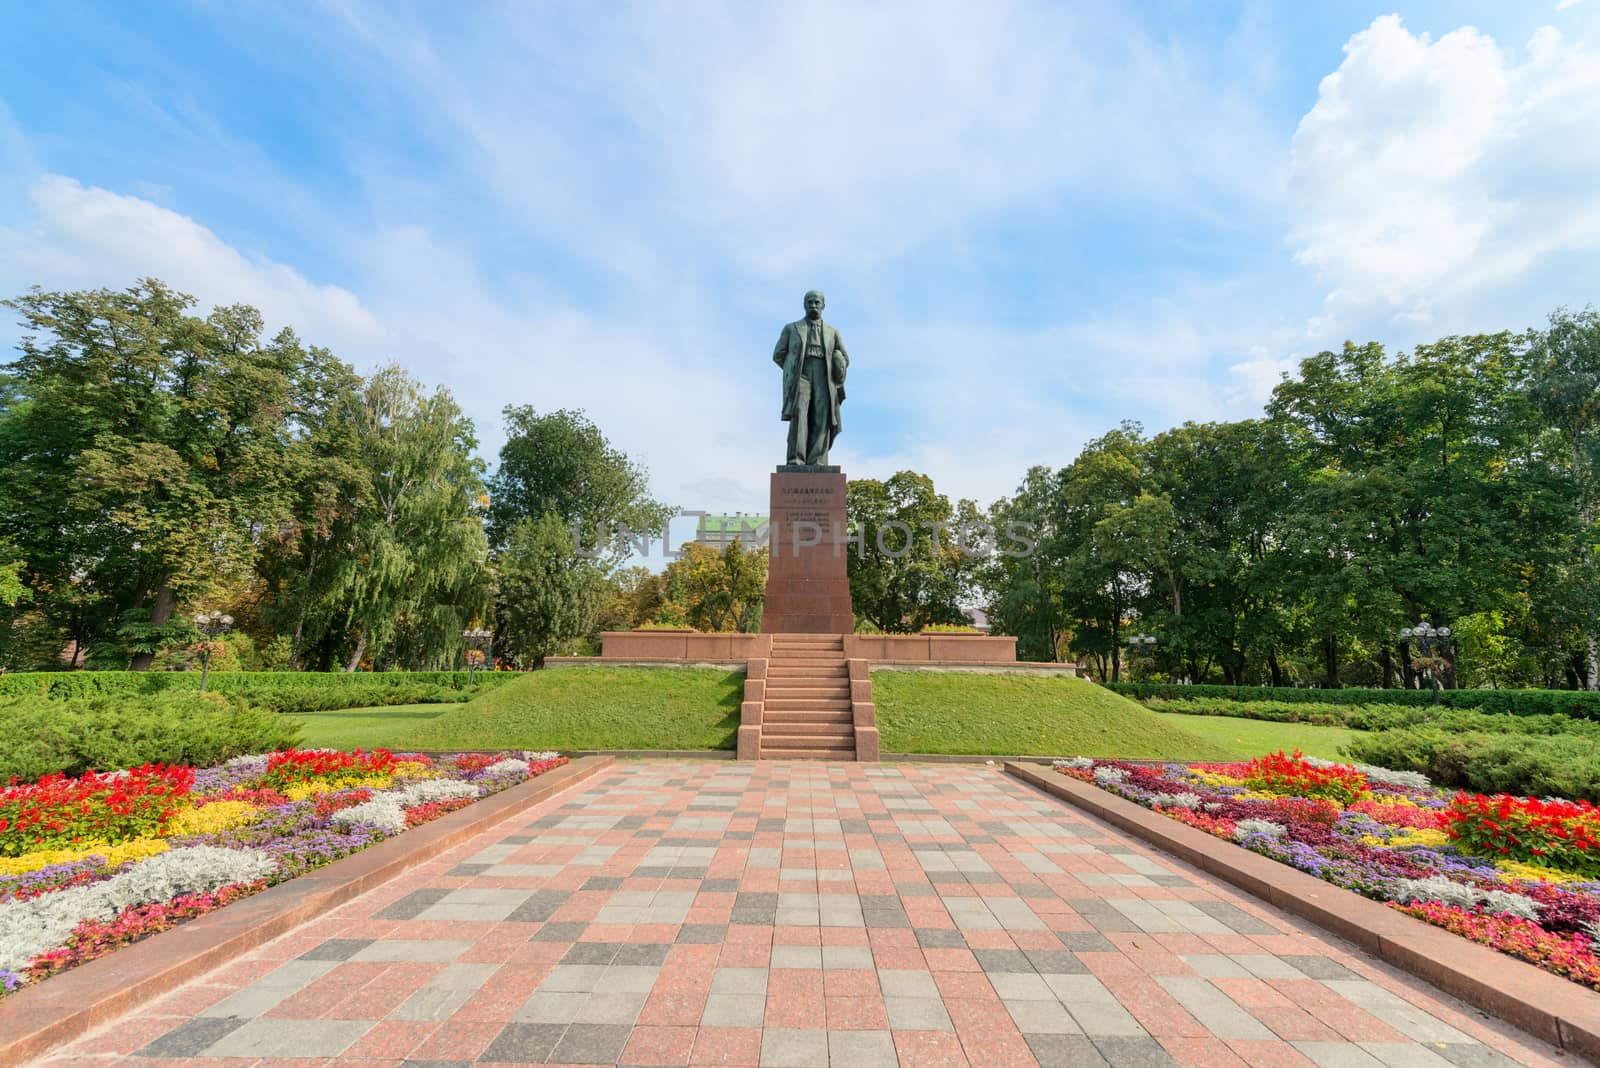 Taras Shevchenko monument in Shevchenko park, Kyiv, Ukraine under blue sky